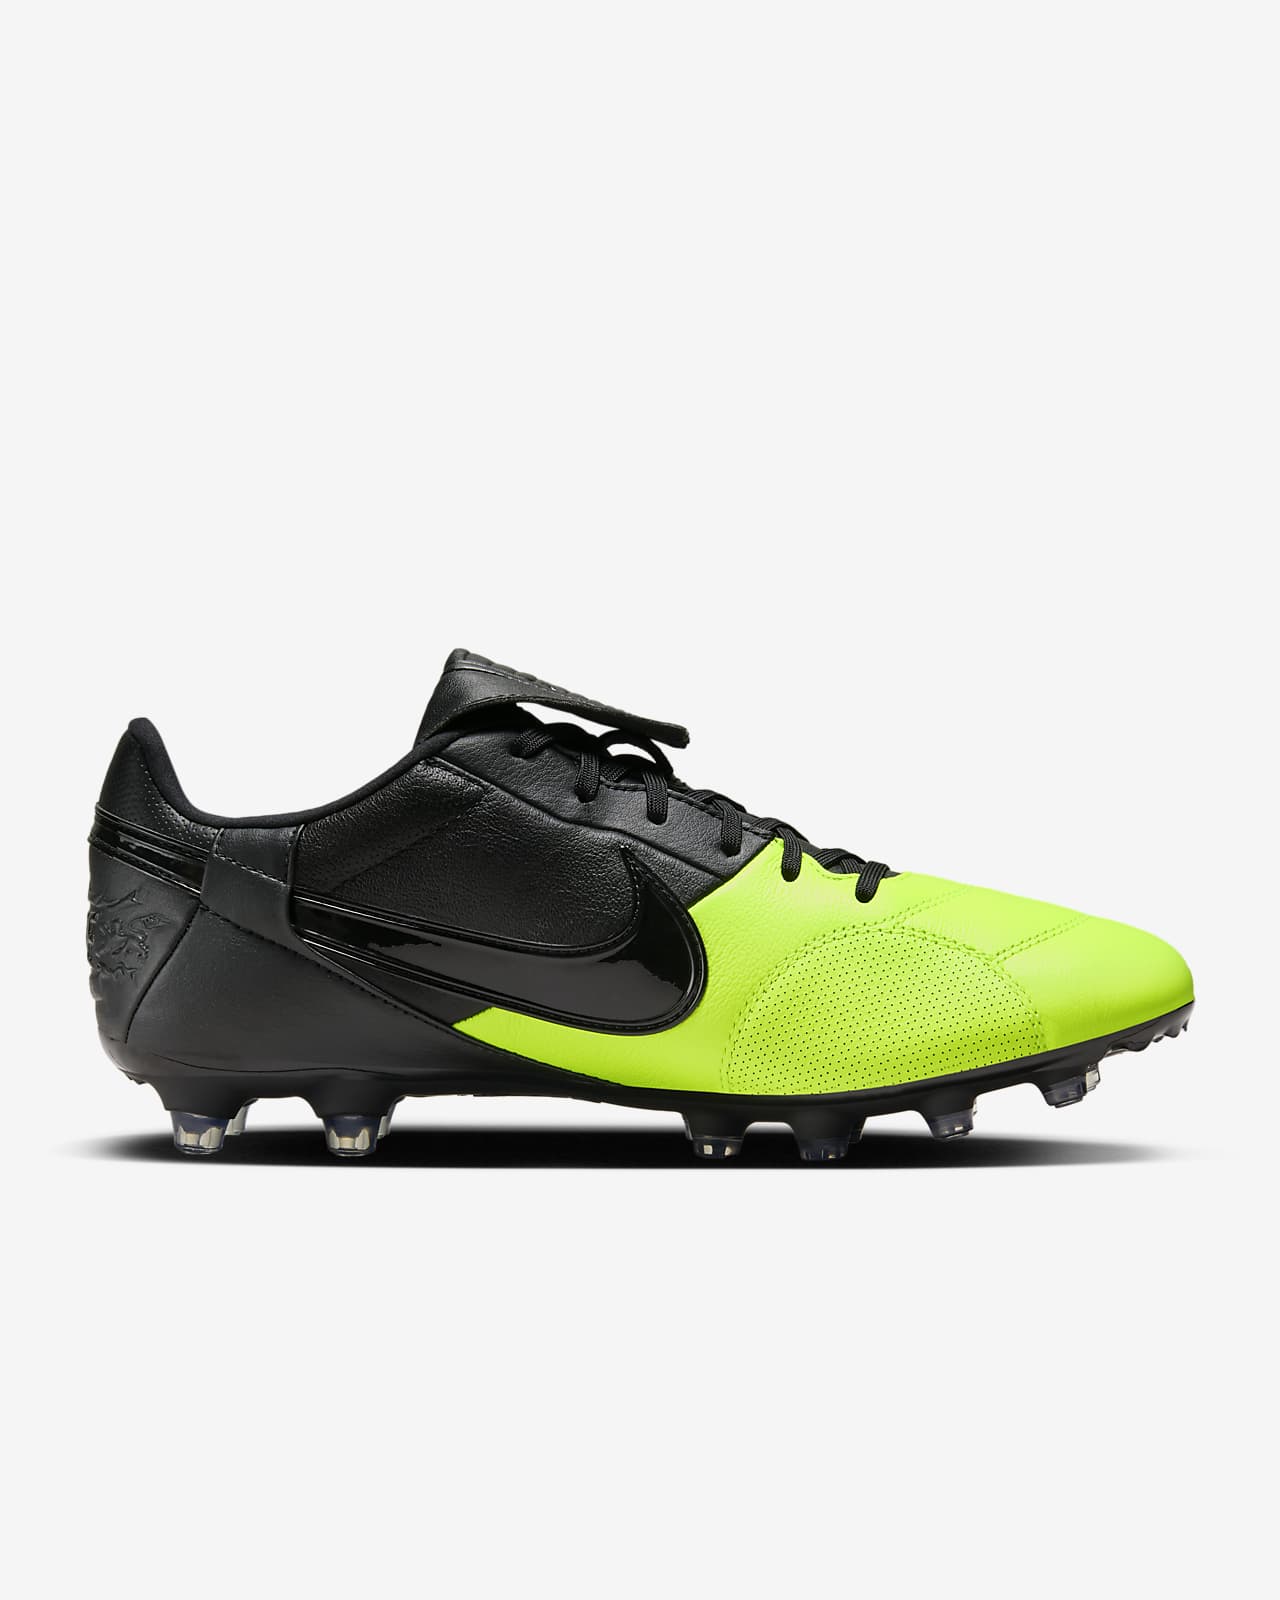 Nike Premier III 3 FG Soccer Cleats Obsidian Green Blue AT5889-431 Men's  Size 7